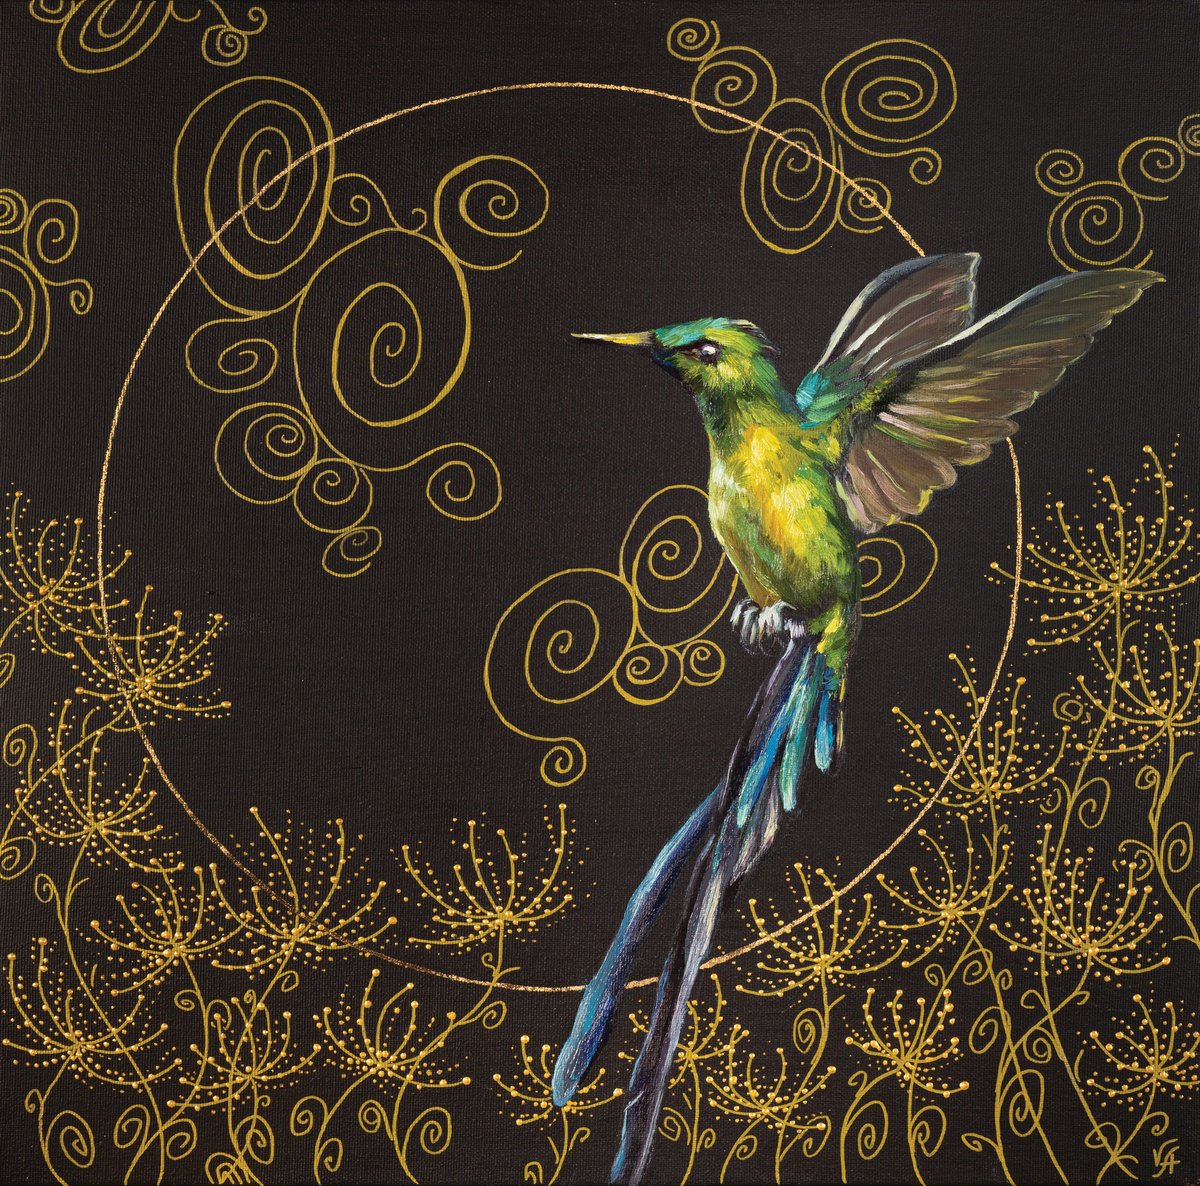 Hummingbird flight by Alona Vakhmistrova